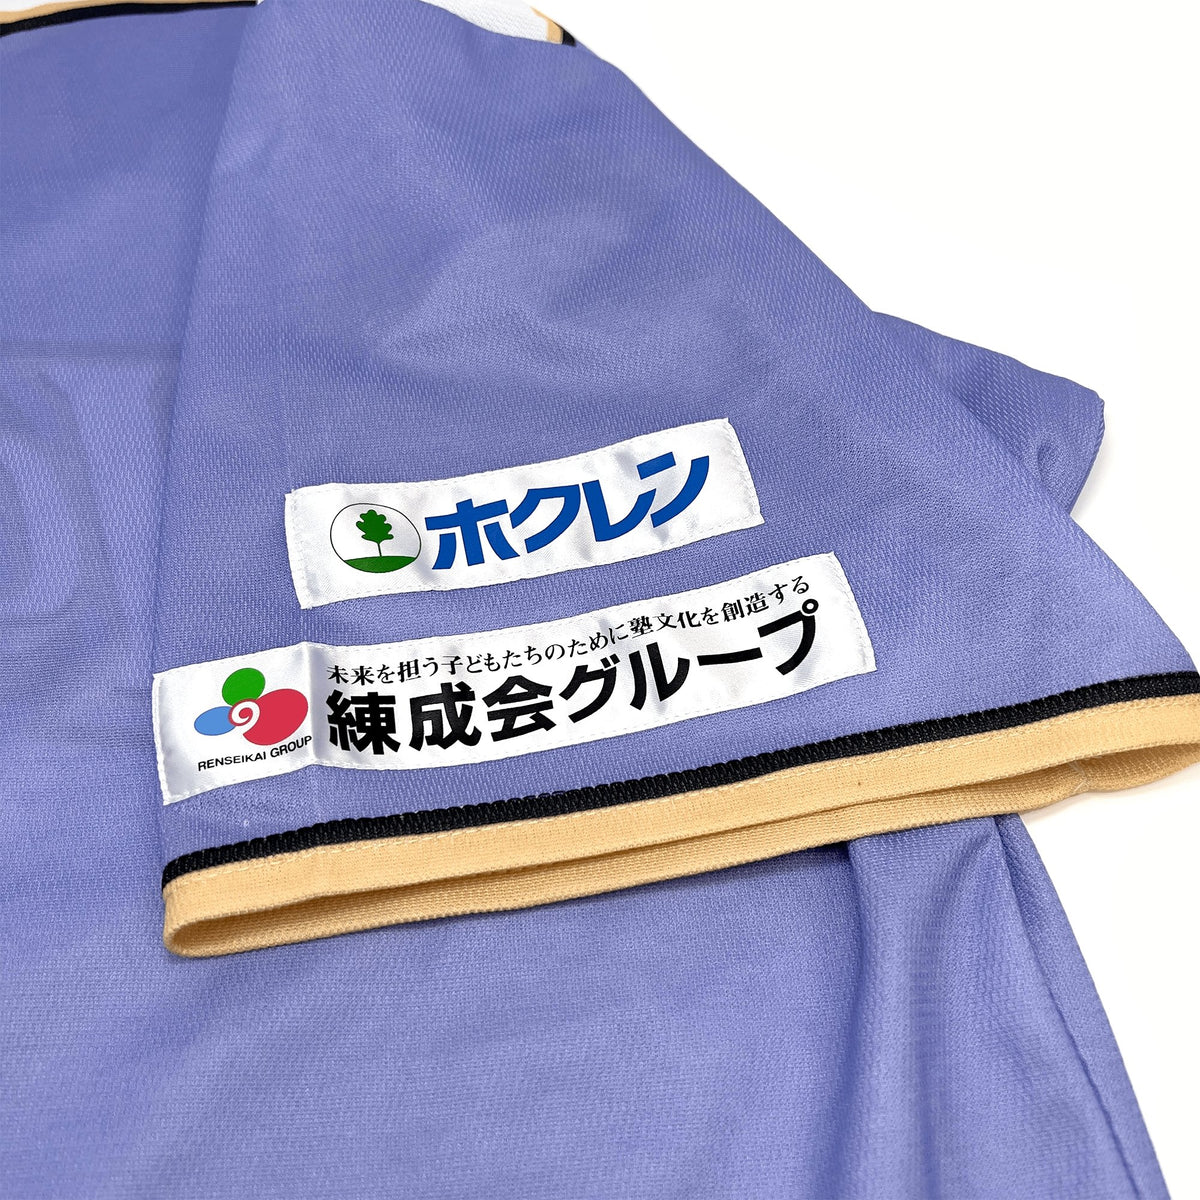 Autographed Signed Nippon Ham Fighters Shohei Ohtani Baseball + Bonus  Jersey – Sugoi JDM